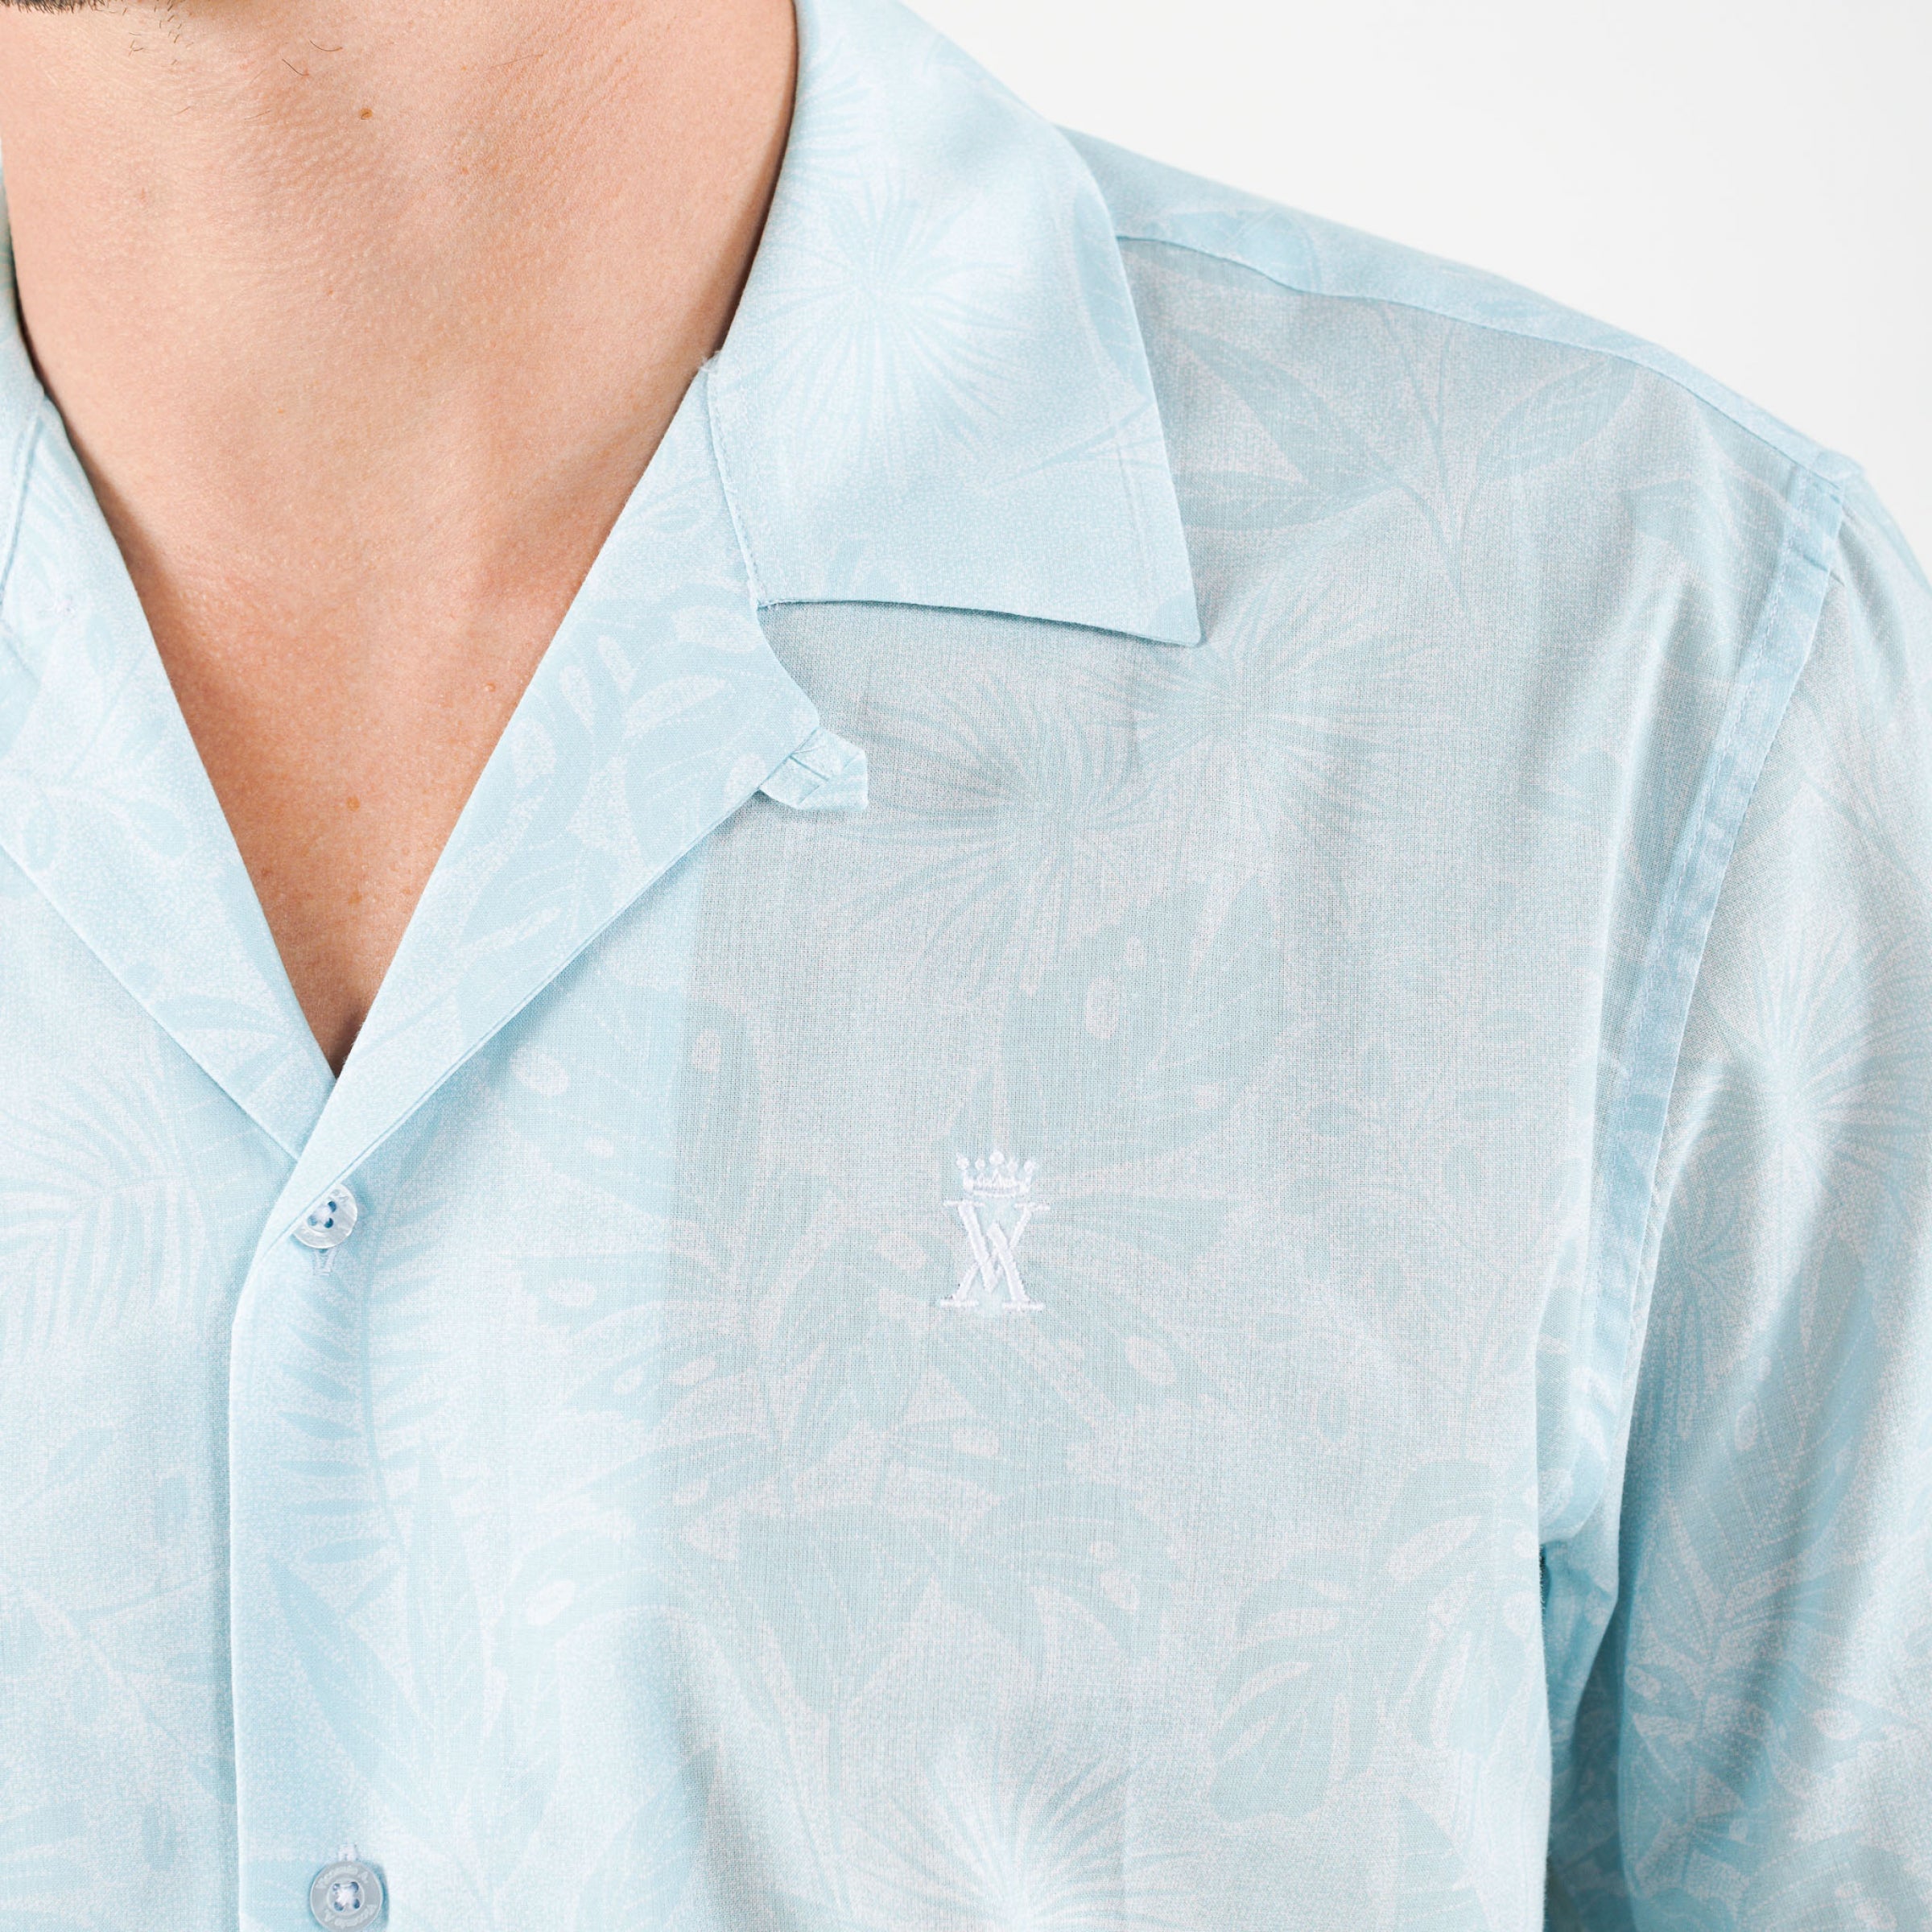 Vicomte A - Sky Blue Short Sleeve Shirt - Capri - The Good Chic